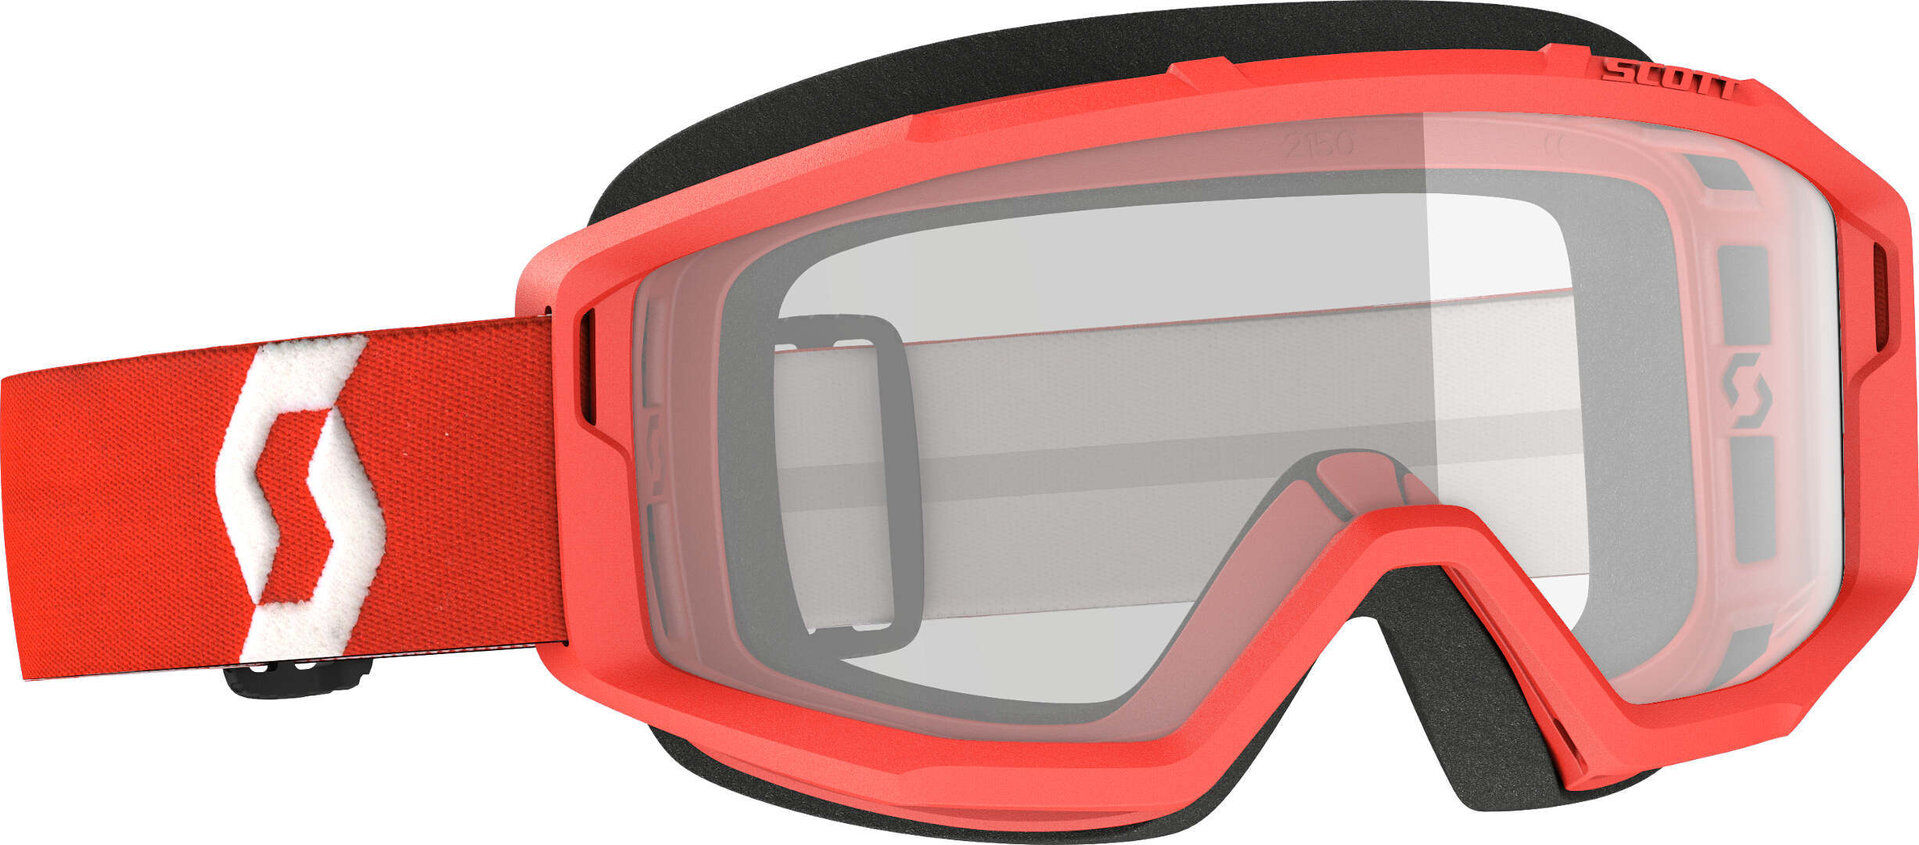 Scott Primal Clear gafas rojas de Motocross - Rojo (un tamaño)